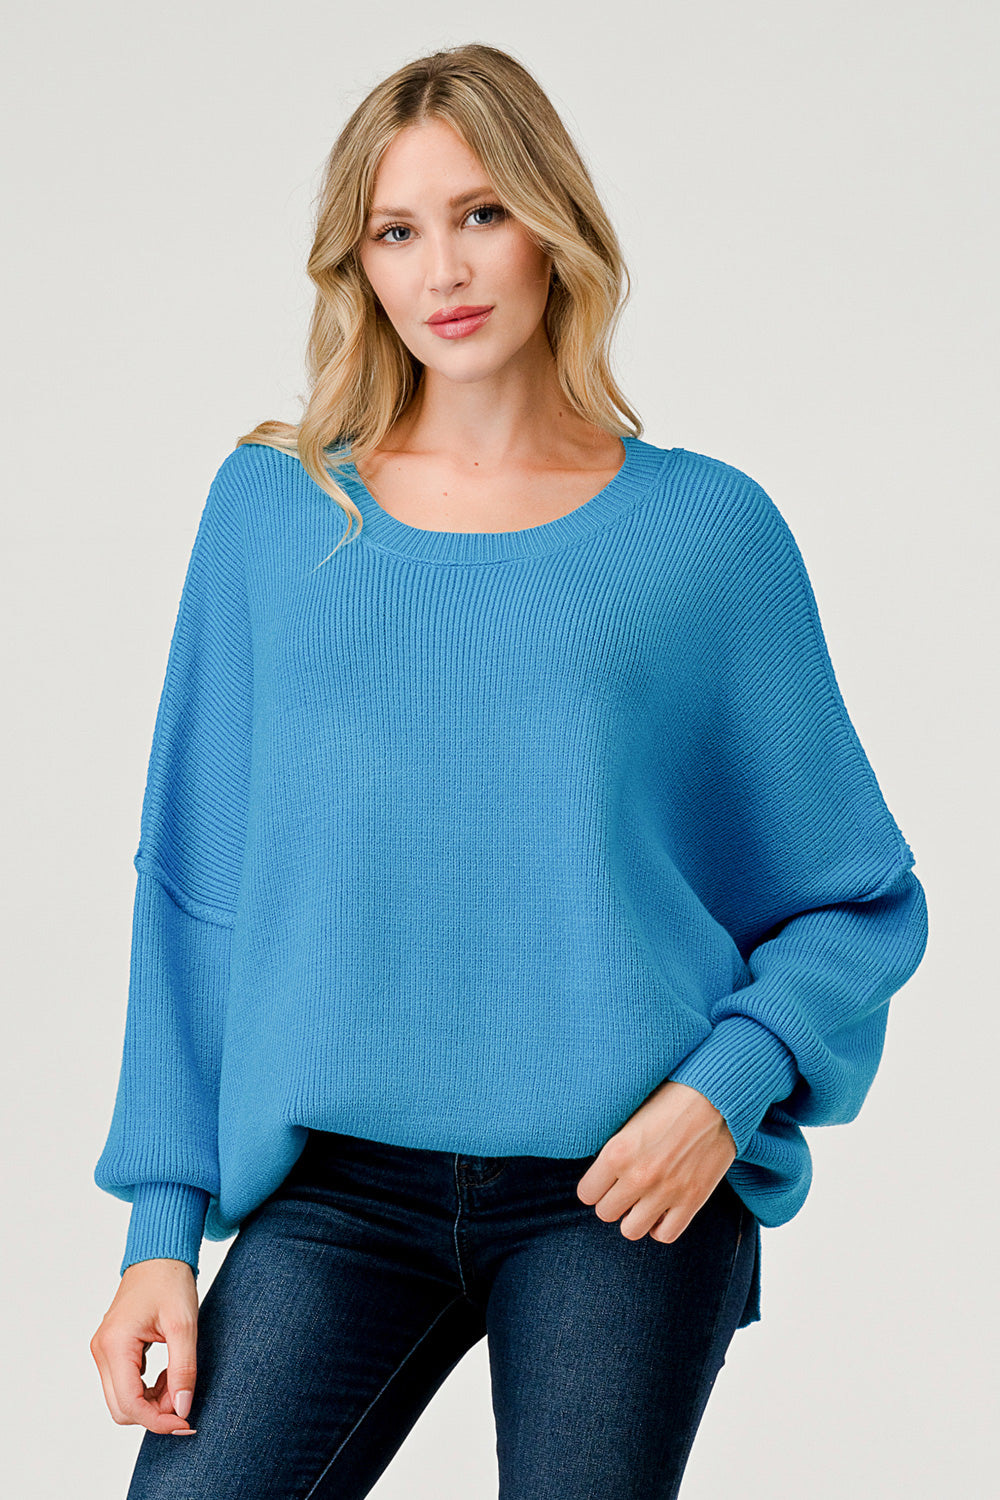 Mbt-3025 Reverse Seam Pullover Sweater Blue -$24.95